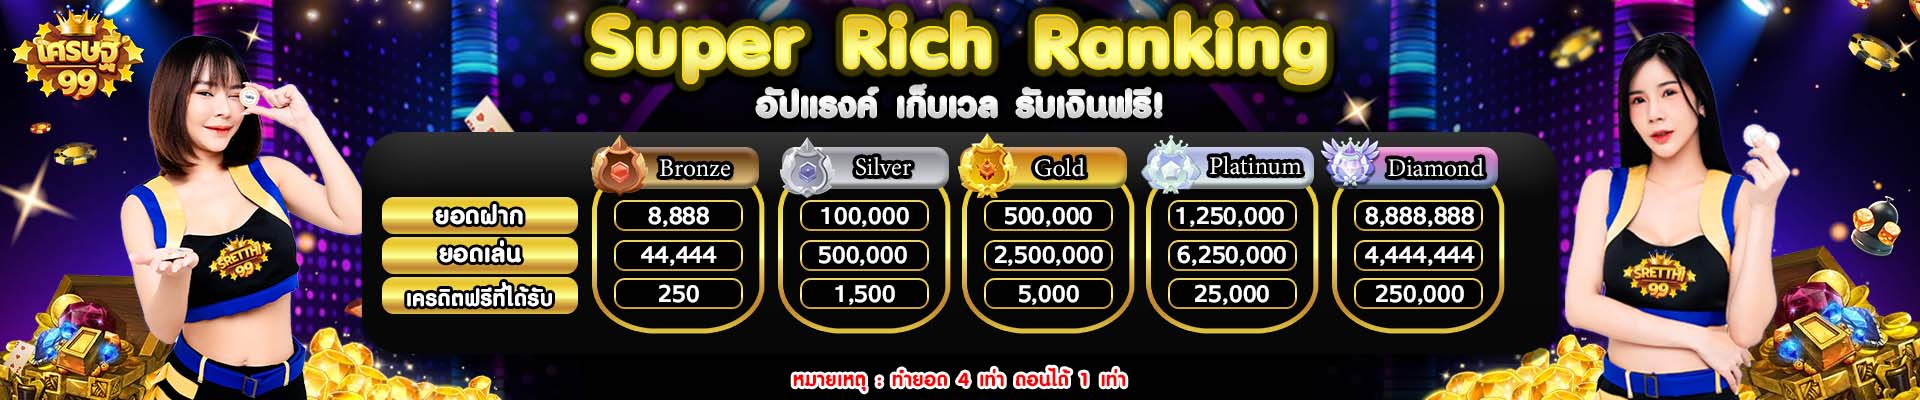 Super Rich Ranking srethi99 1920 400 - Slot webSlot99 พนันออนไลน์เว็บตรง สล็อตออนไลน์ ใหม่ล่าสุด Top 90 by Fallon สล็อตออนไลน์ st99.fun 22 เมษา 2567